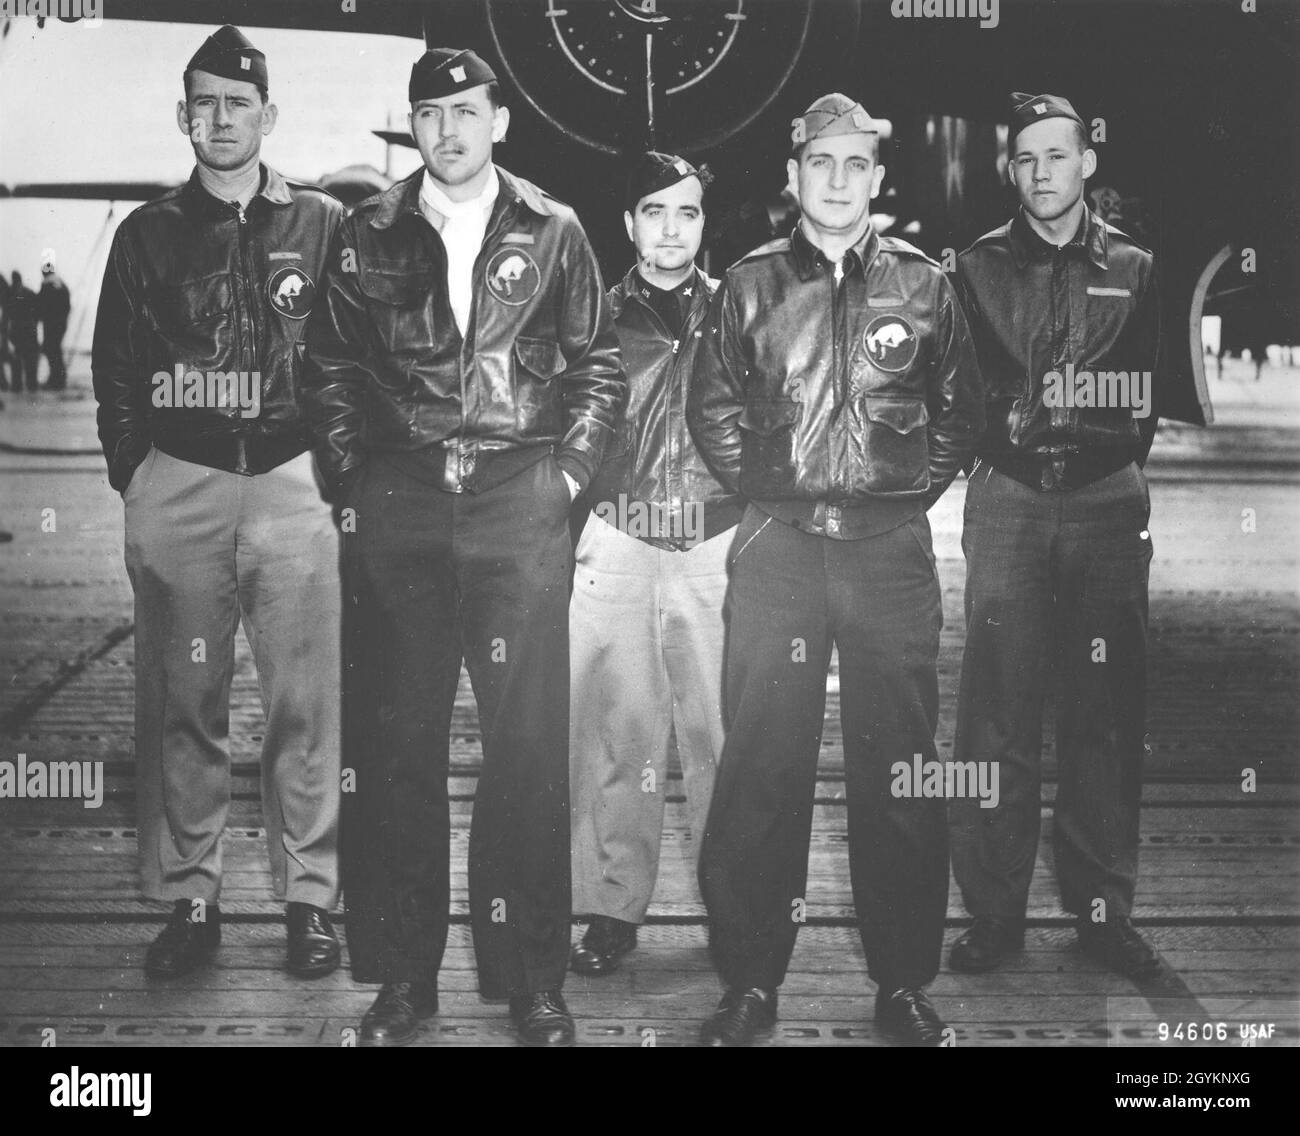 Crew No. 7 (Plane #40-2261, target Tokyo): 95th Bombardment Squadron, Lt. Ted W. Lawson, pilot; Lt. Dean Davenport, copilot; Lt. Charles L. McClure, navigator; Lt. Robert S. Clever, bombardier; Sgt. David J. Thatcher, flight engineer/gunner. (U.S. Air Force photo) Stock Photo